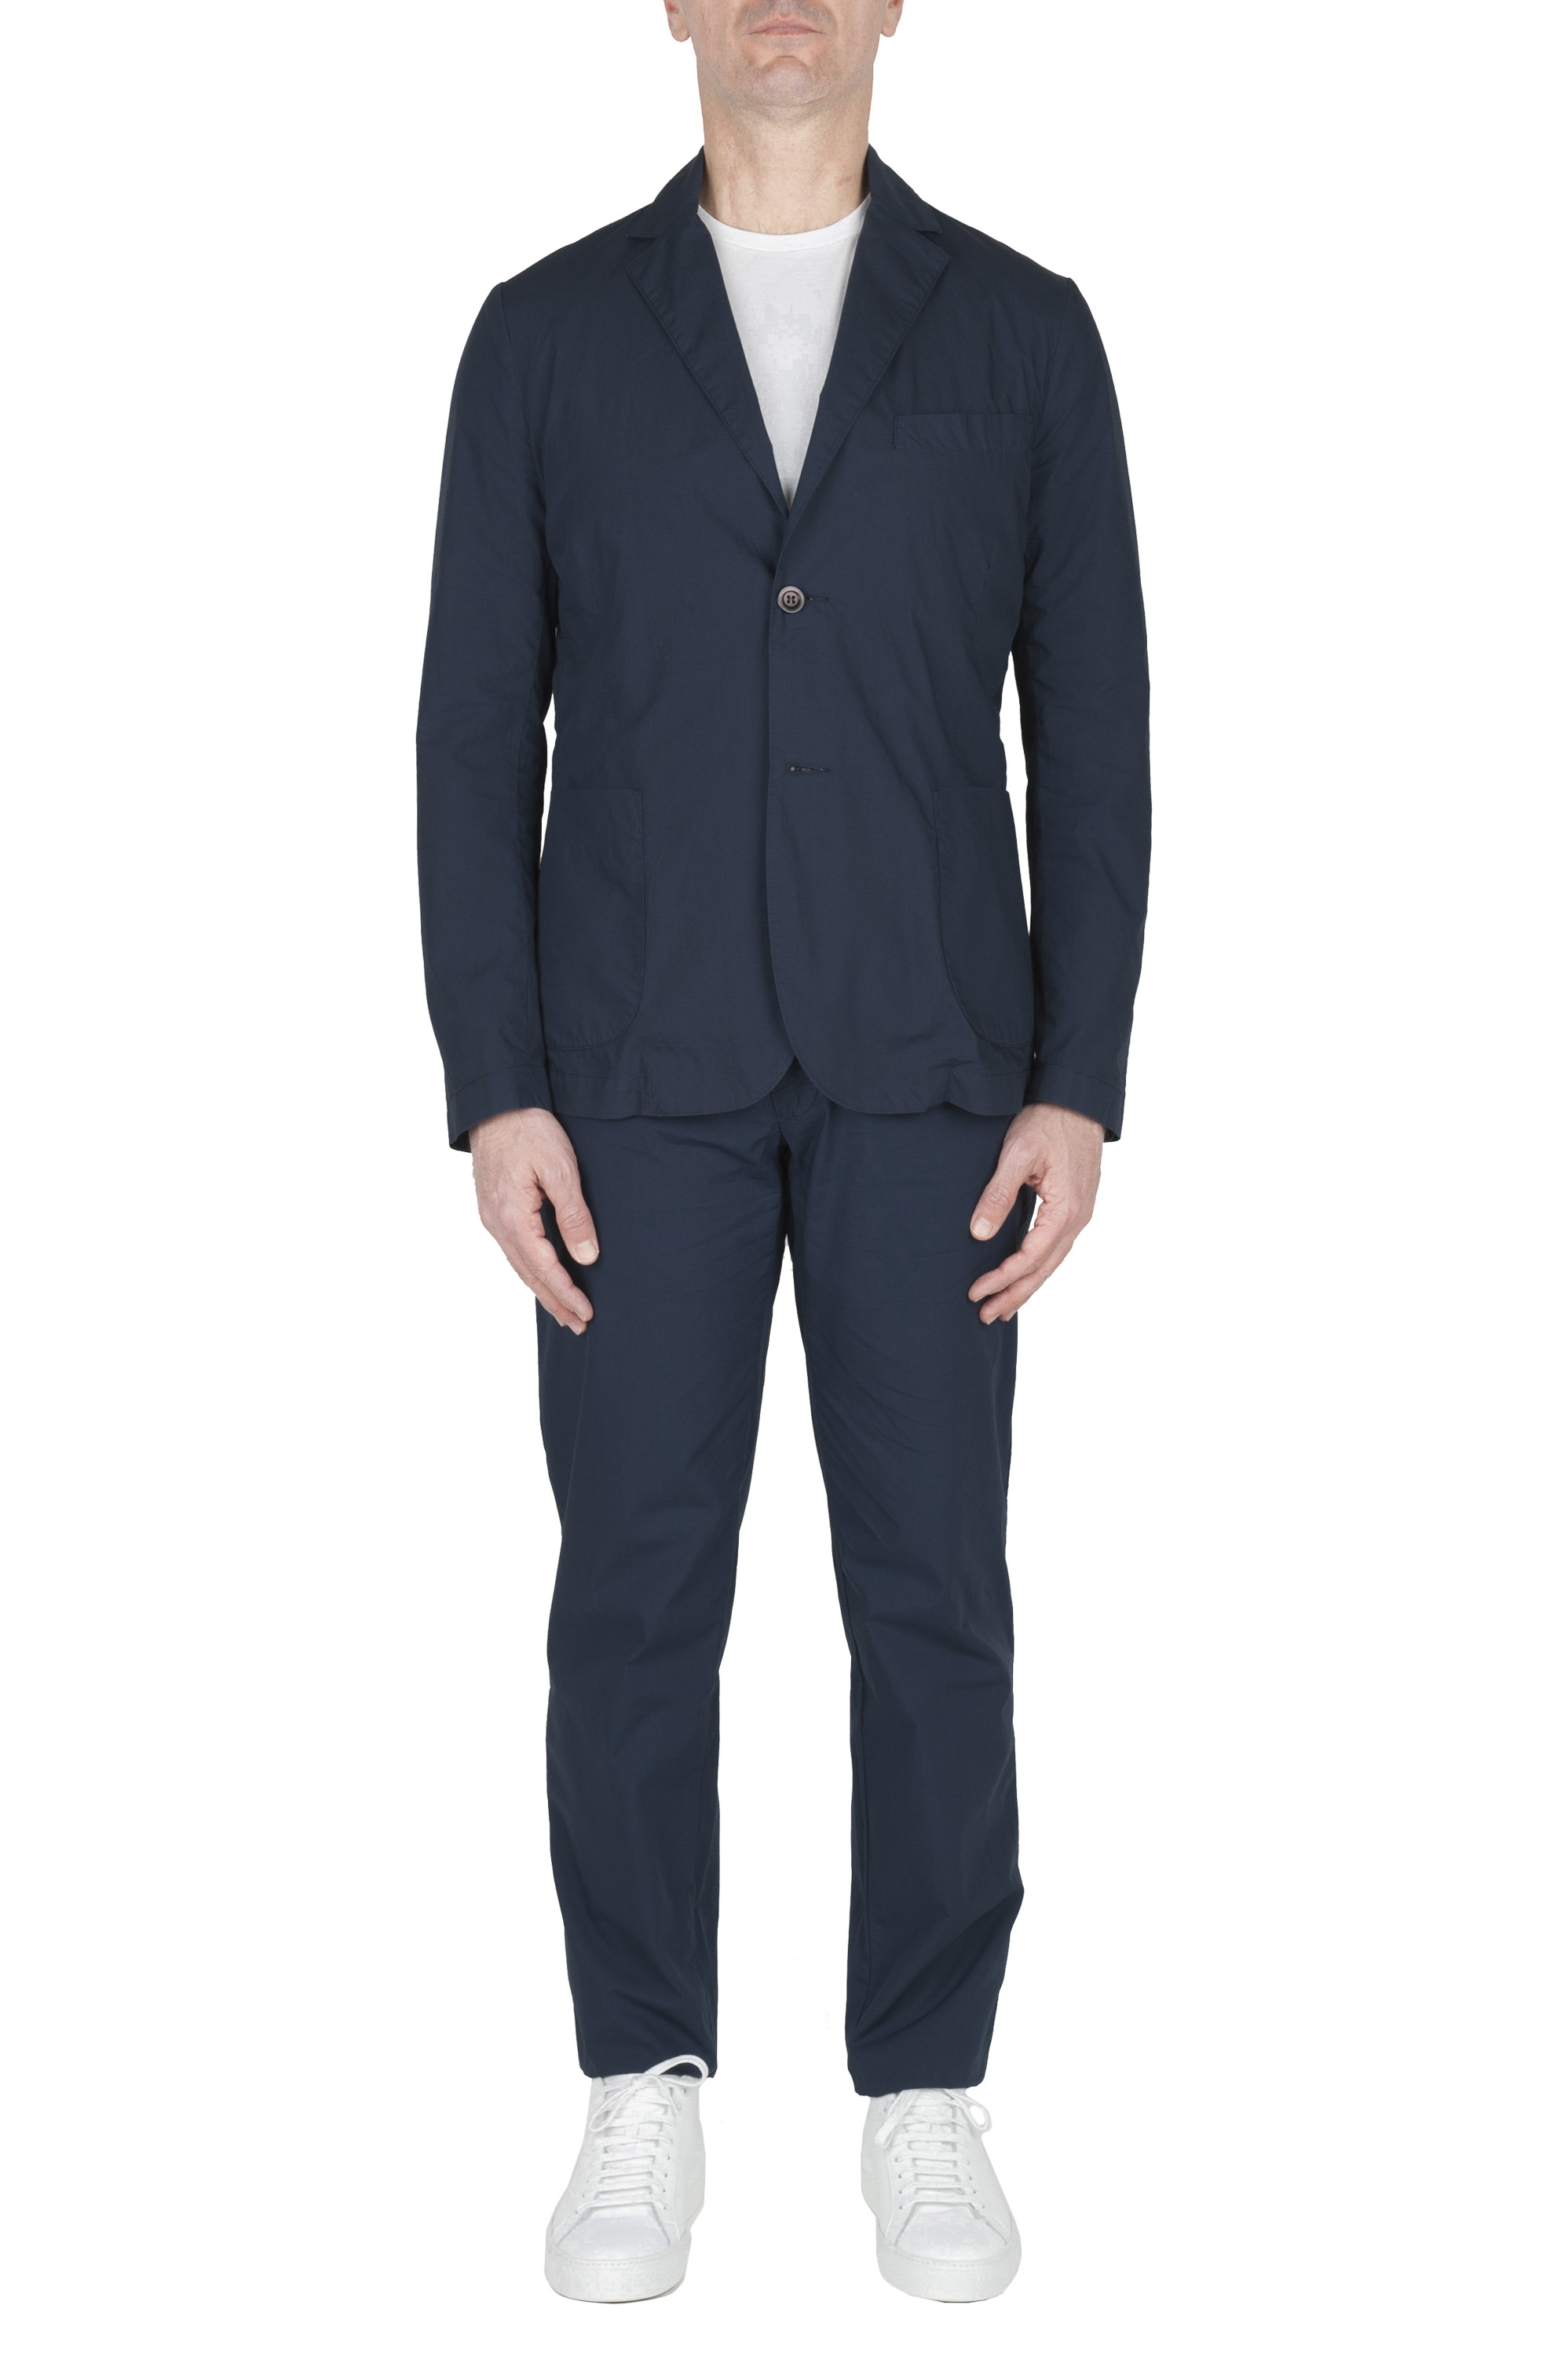 SBU 03056_2021AW Navy blue cotton sport suit blazer and trouser 01